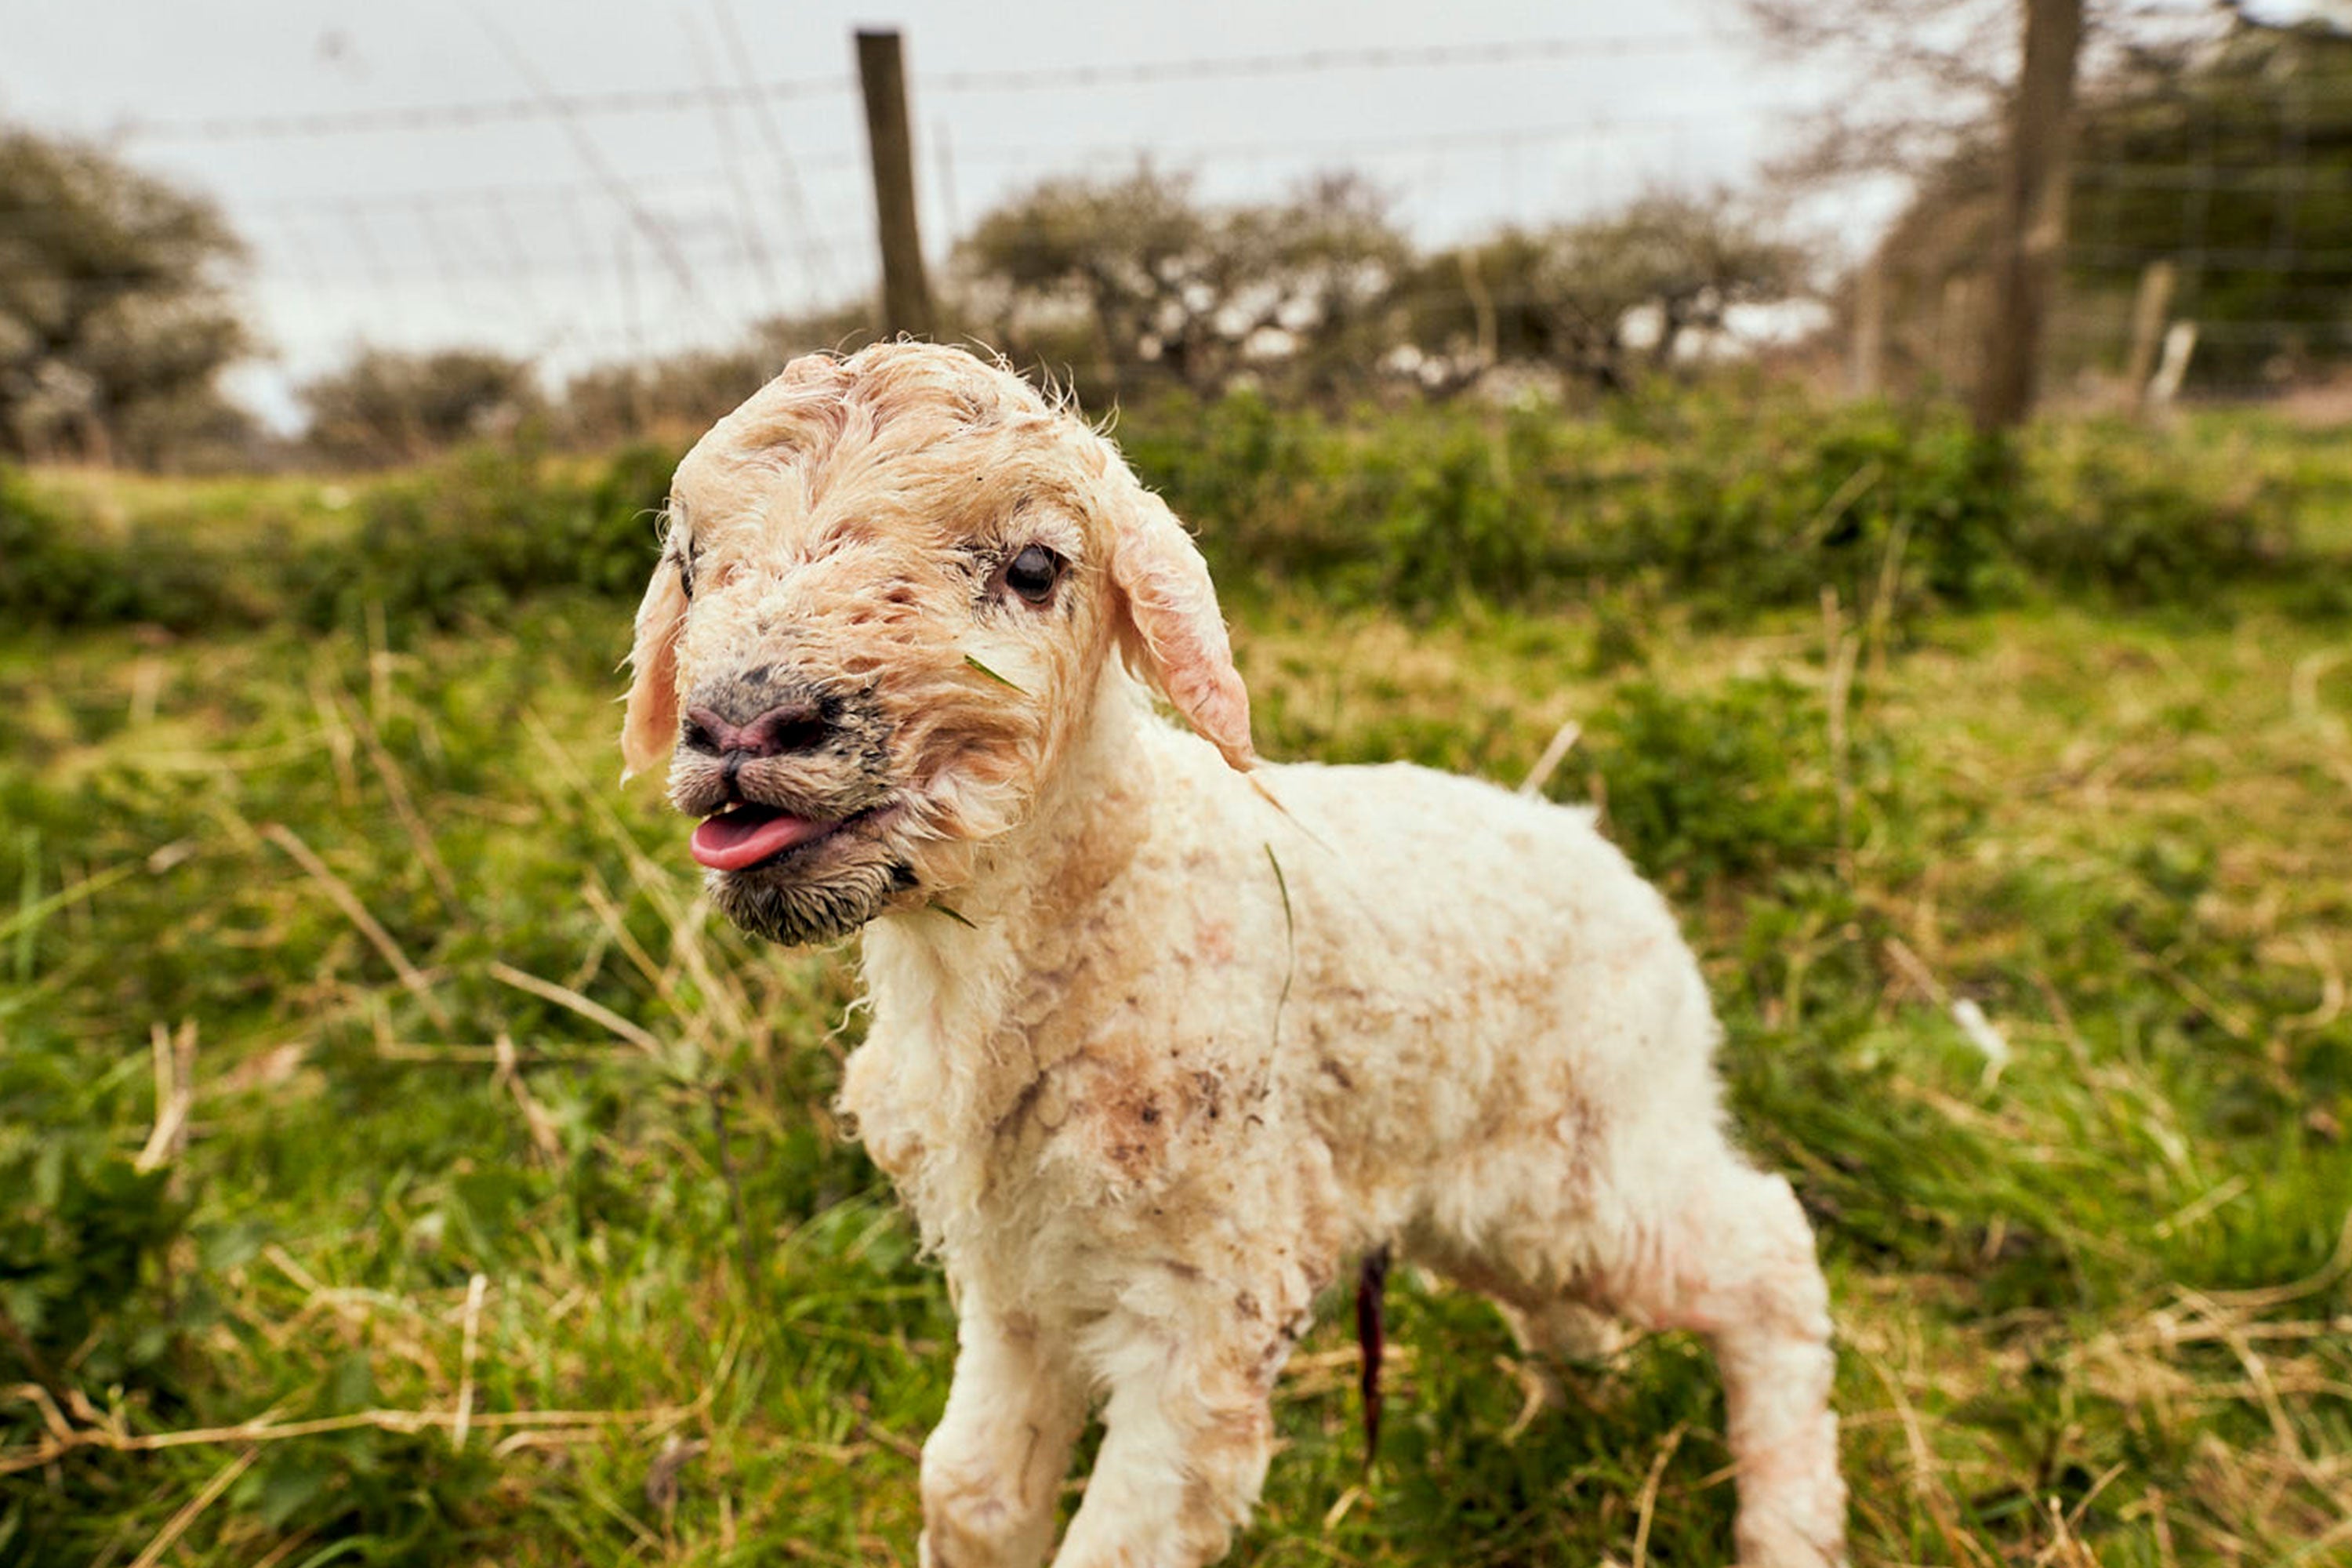 A new born lamb on the farm